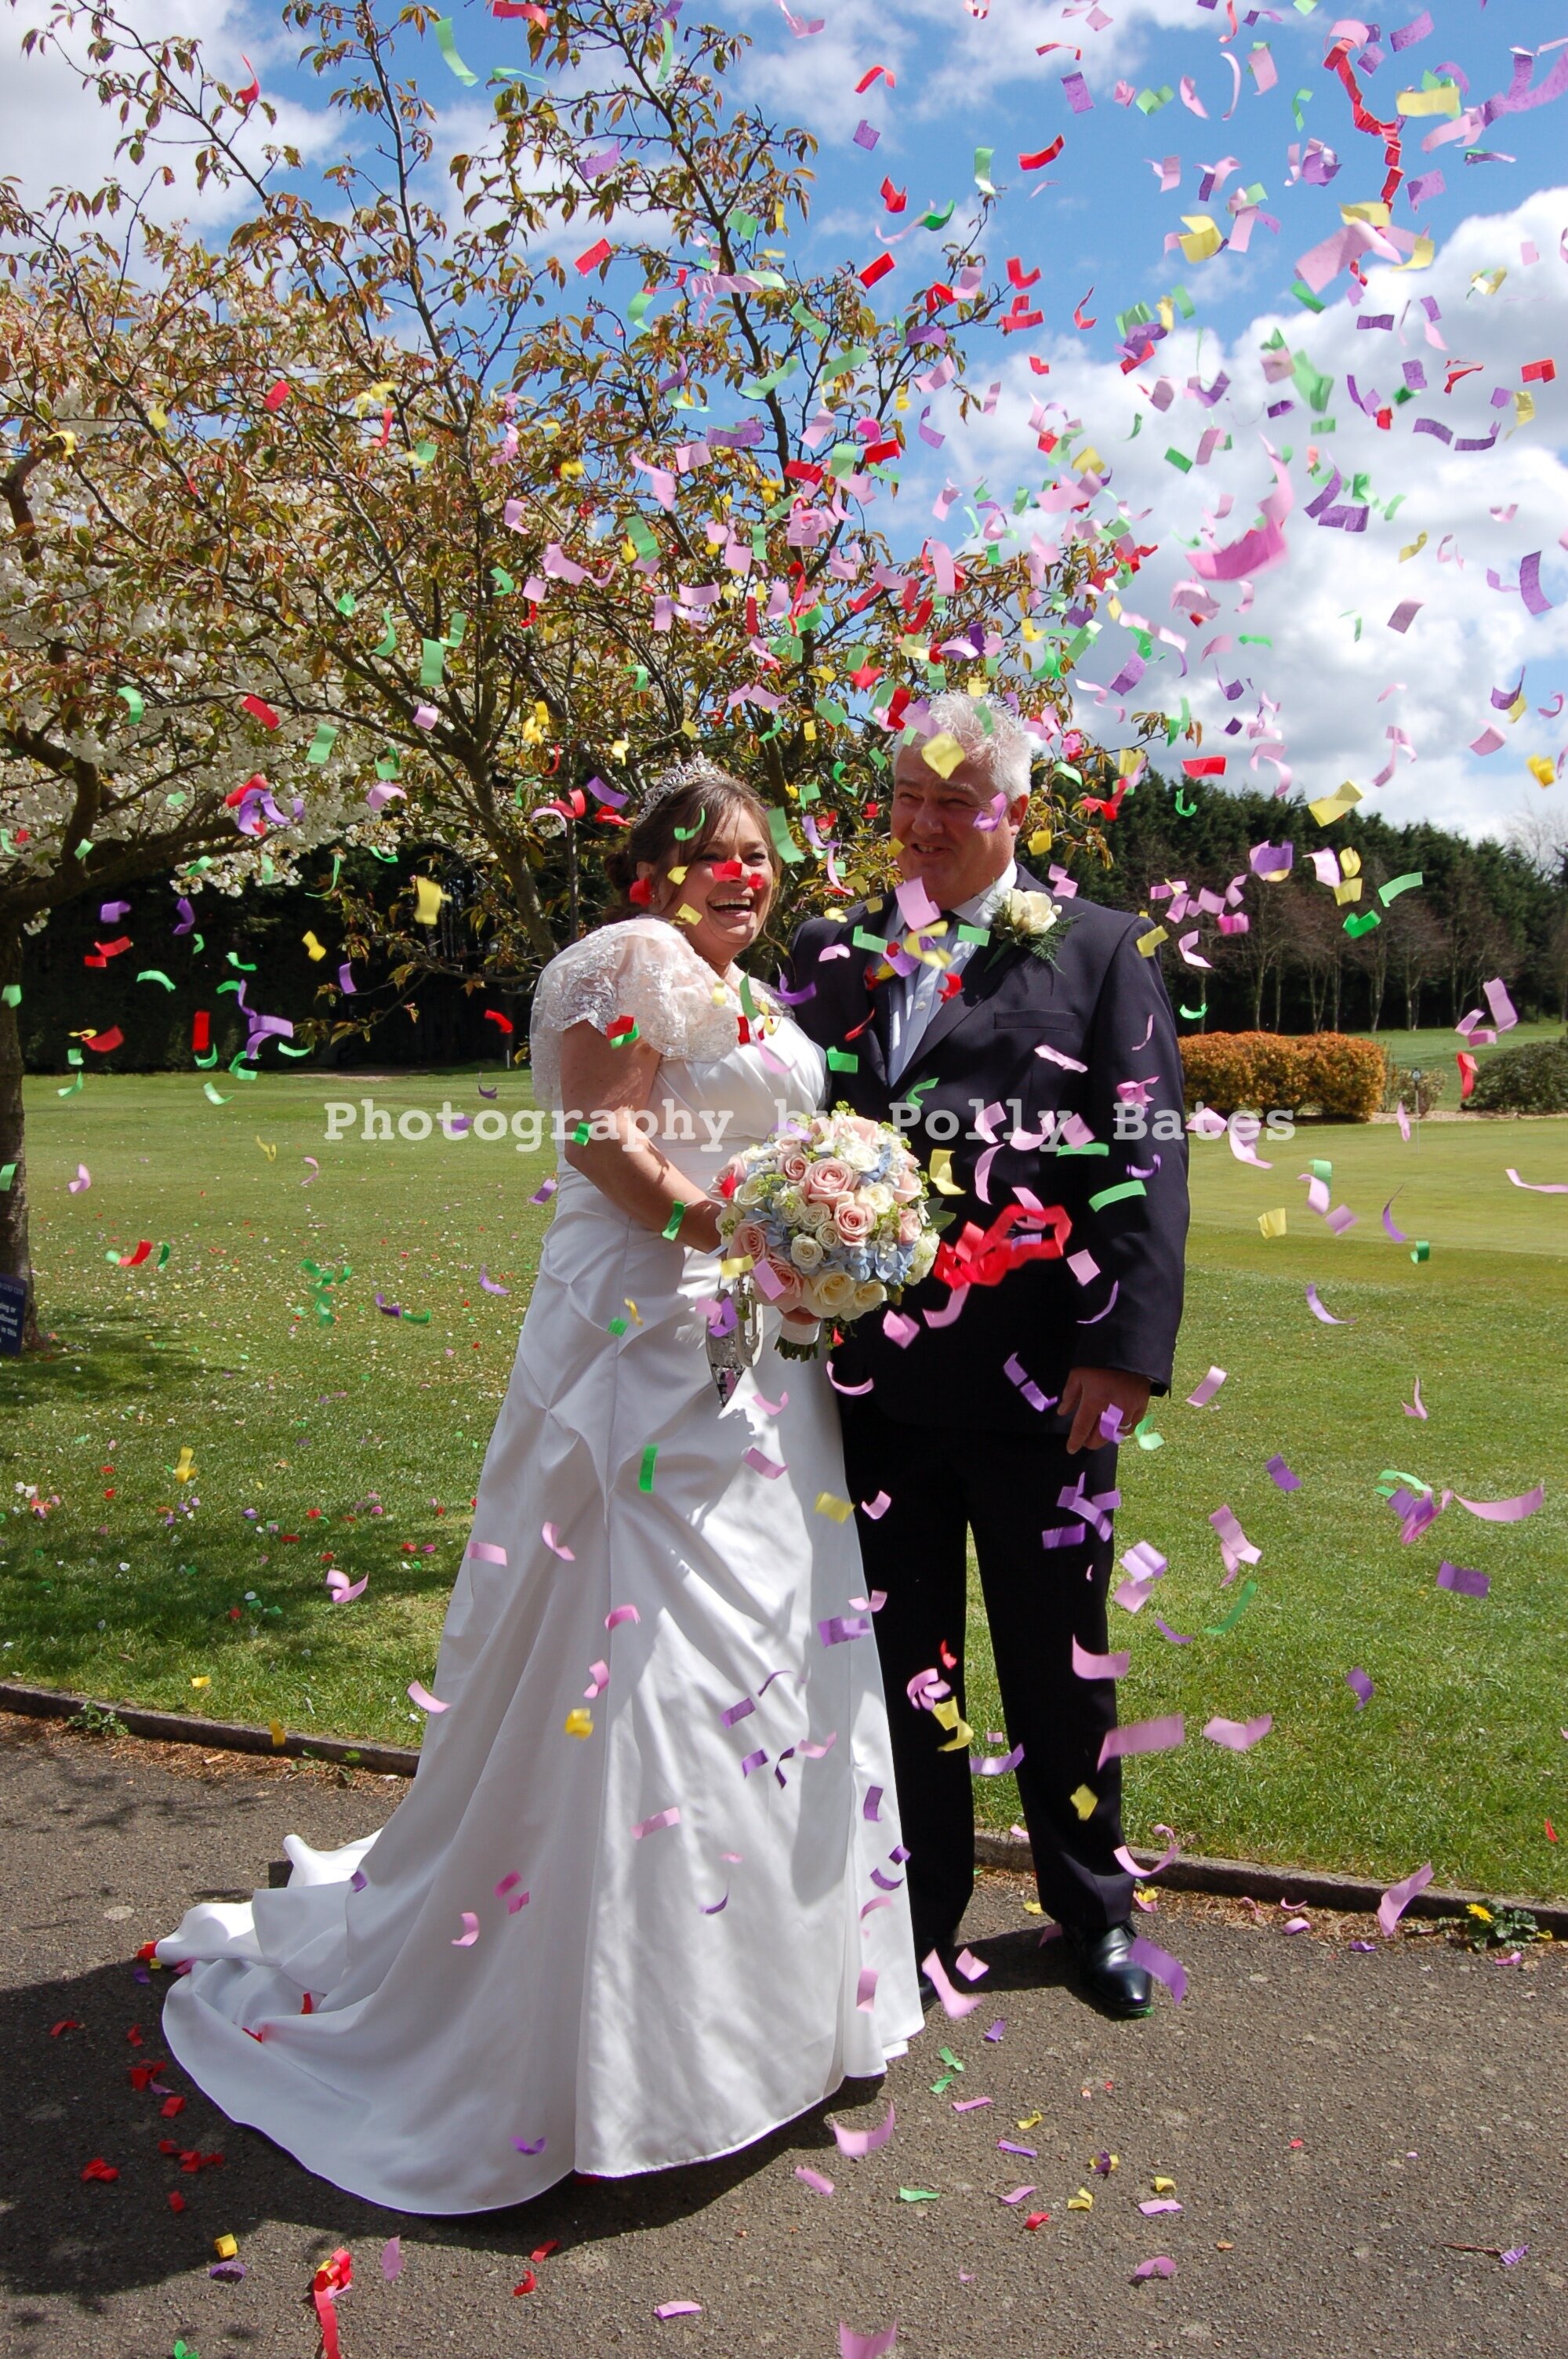 Polly Bates Wedding Photography 3.JPG